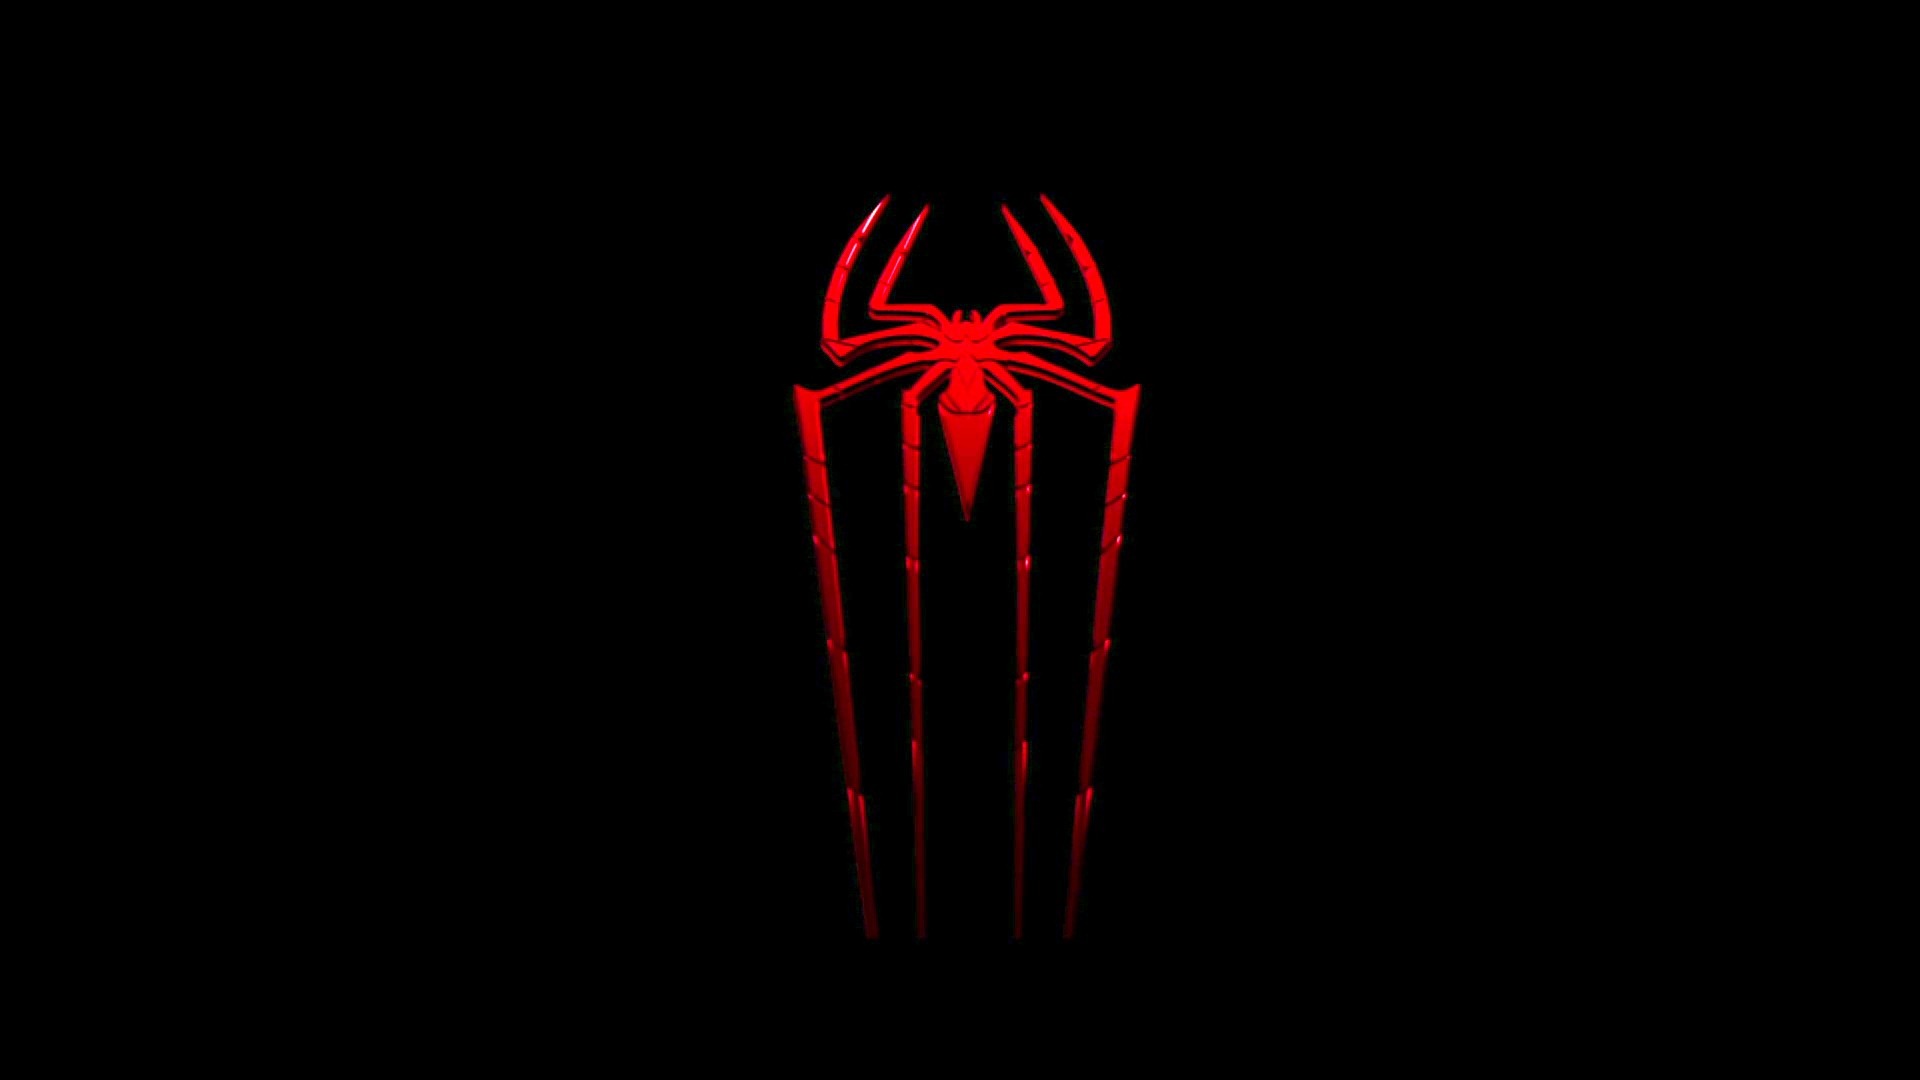 Spiderman Logo Wallpaper High Definition : Other Wallpaper ...